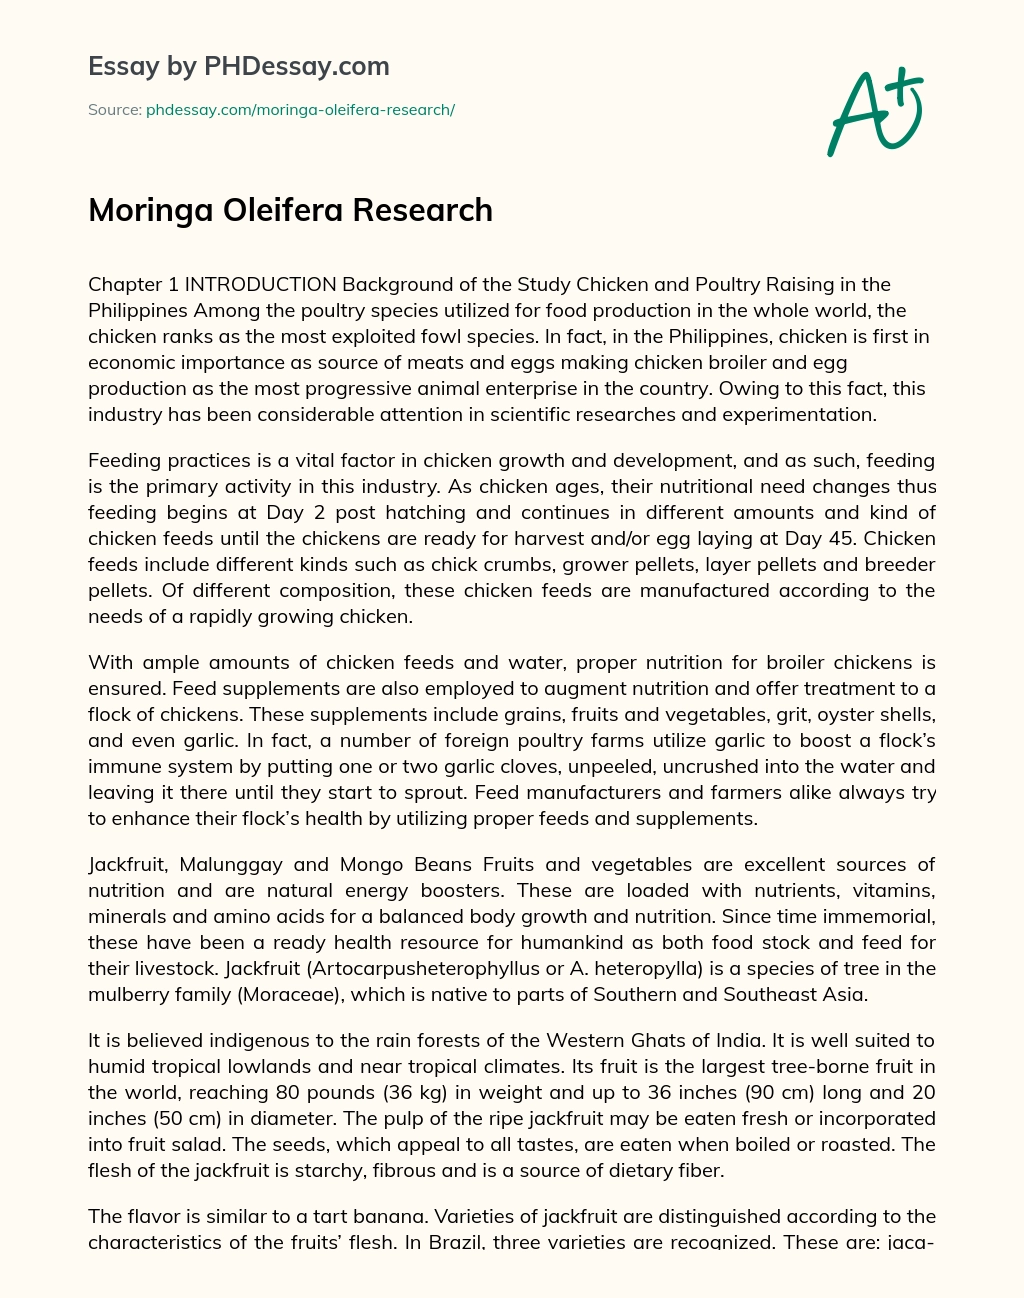 Moringa Oleifera Research essay